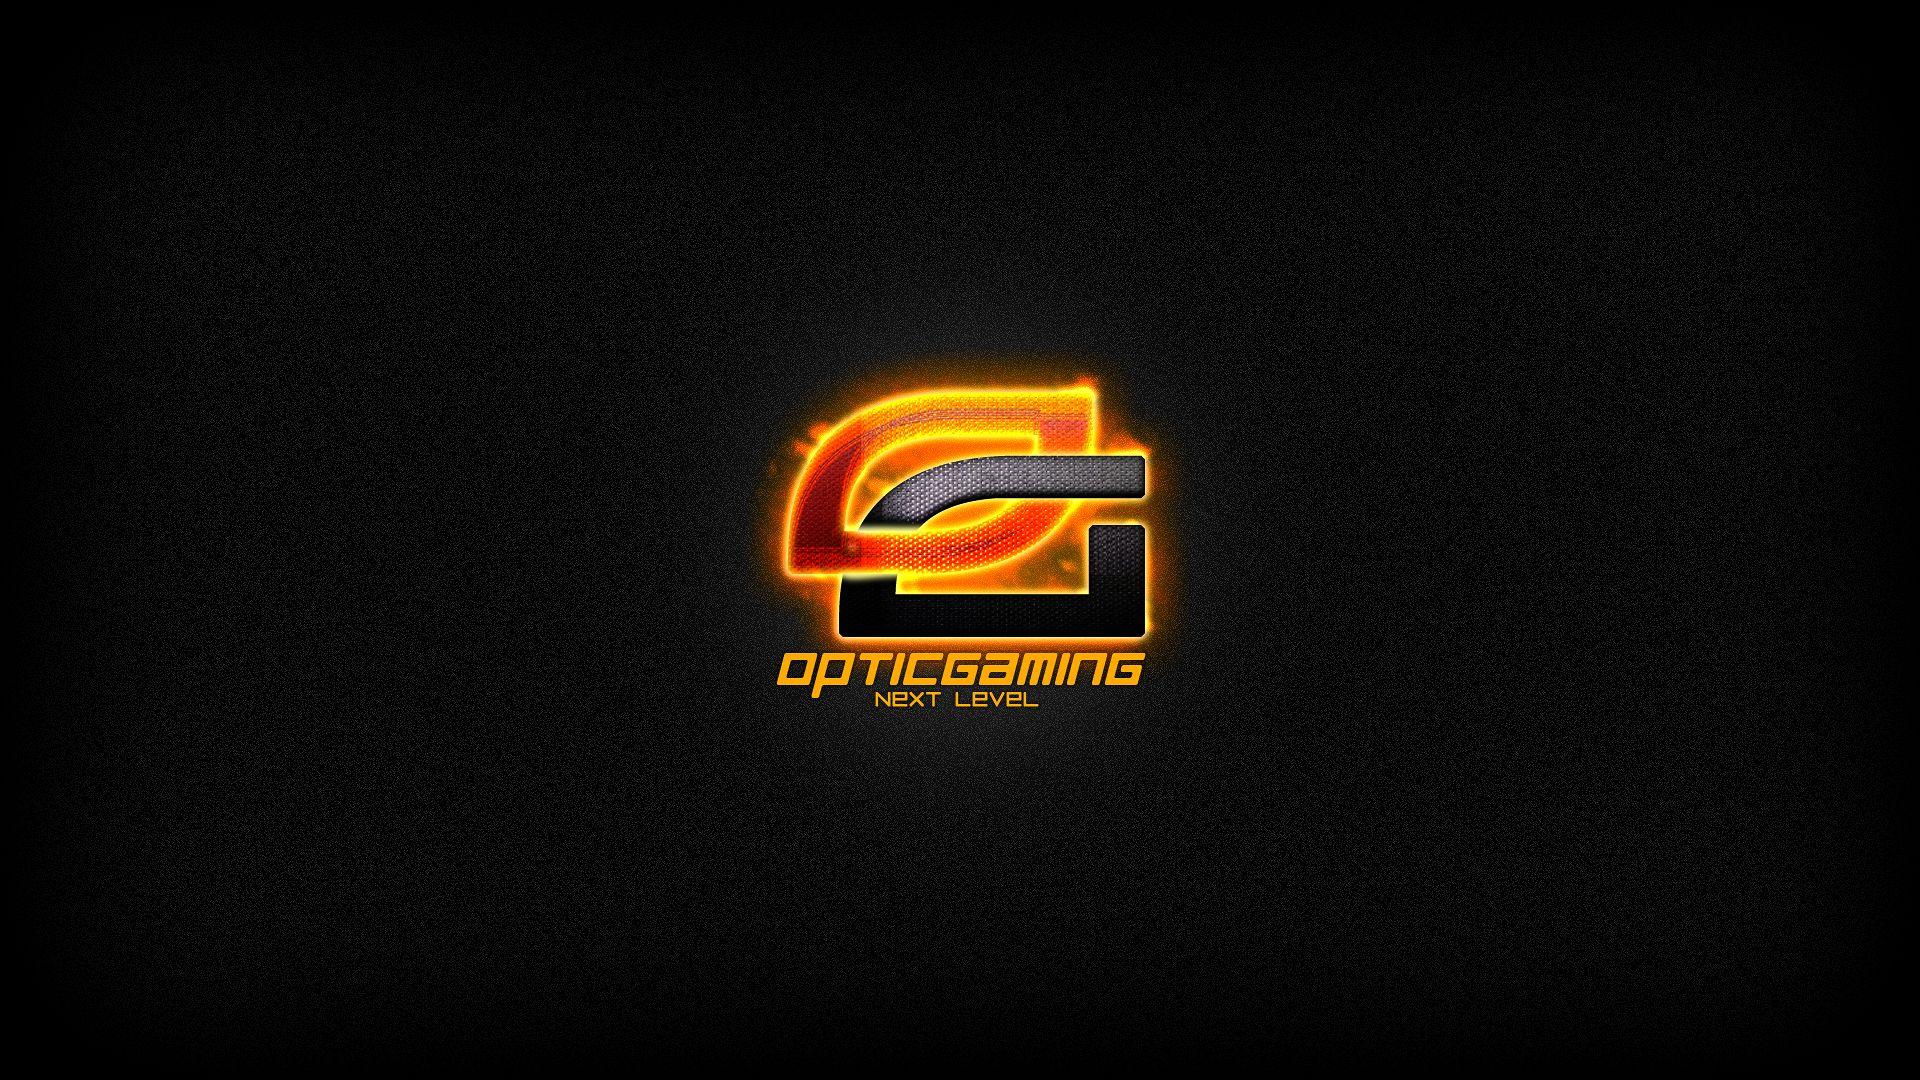 FaZe Gaming Logo - 1920x1080px Optic Gaming Logo Wallpaper - WallpaperSafari